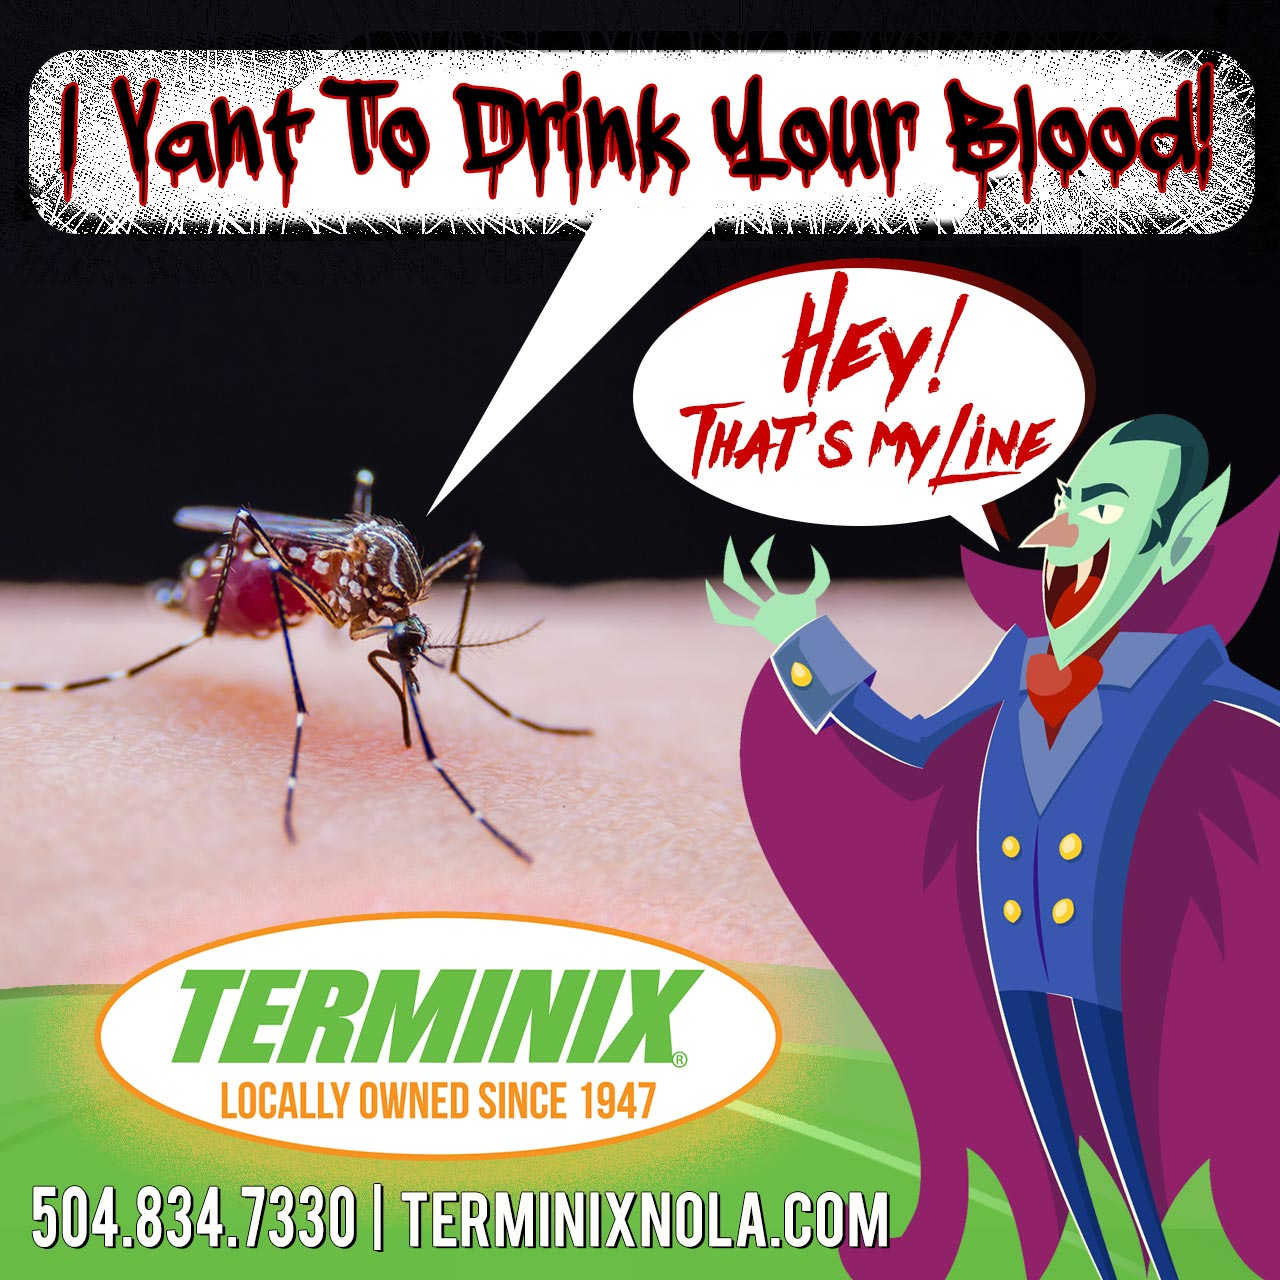 Terminix Mosquito & Vampire - Halloween Social Media Posts